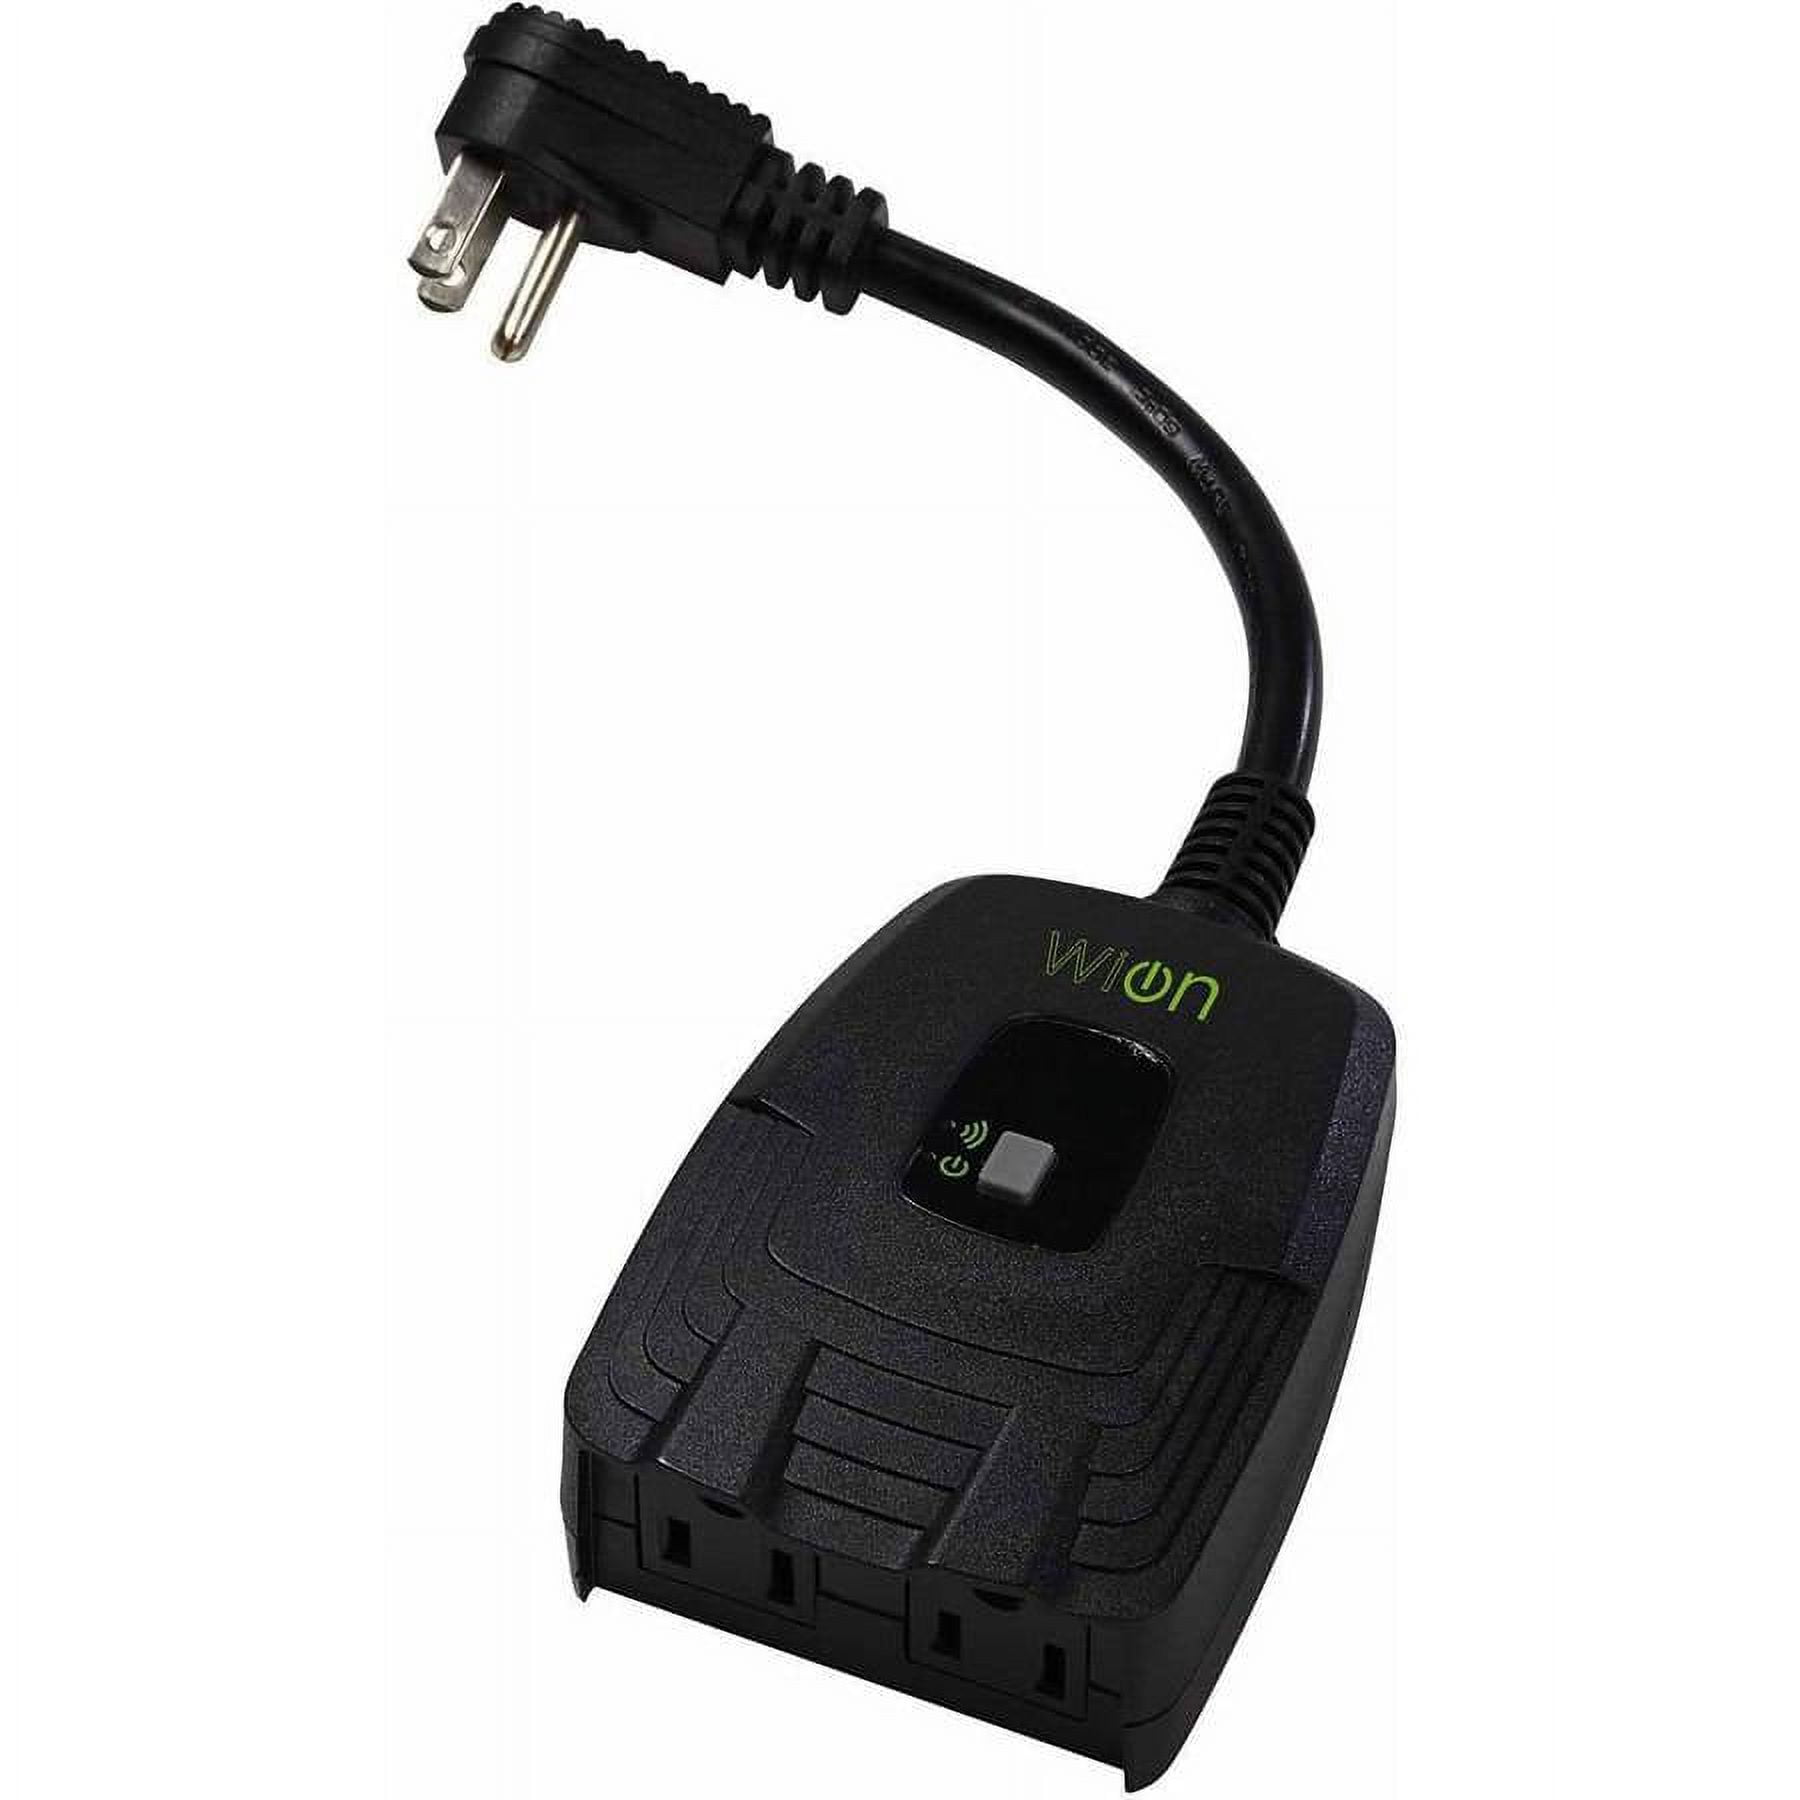 VIVOHOME Outdoor Smart Plug  Smart plug, Plugs, Voice remote